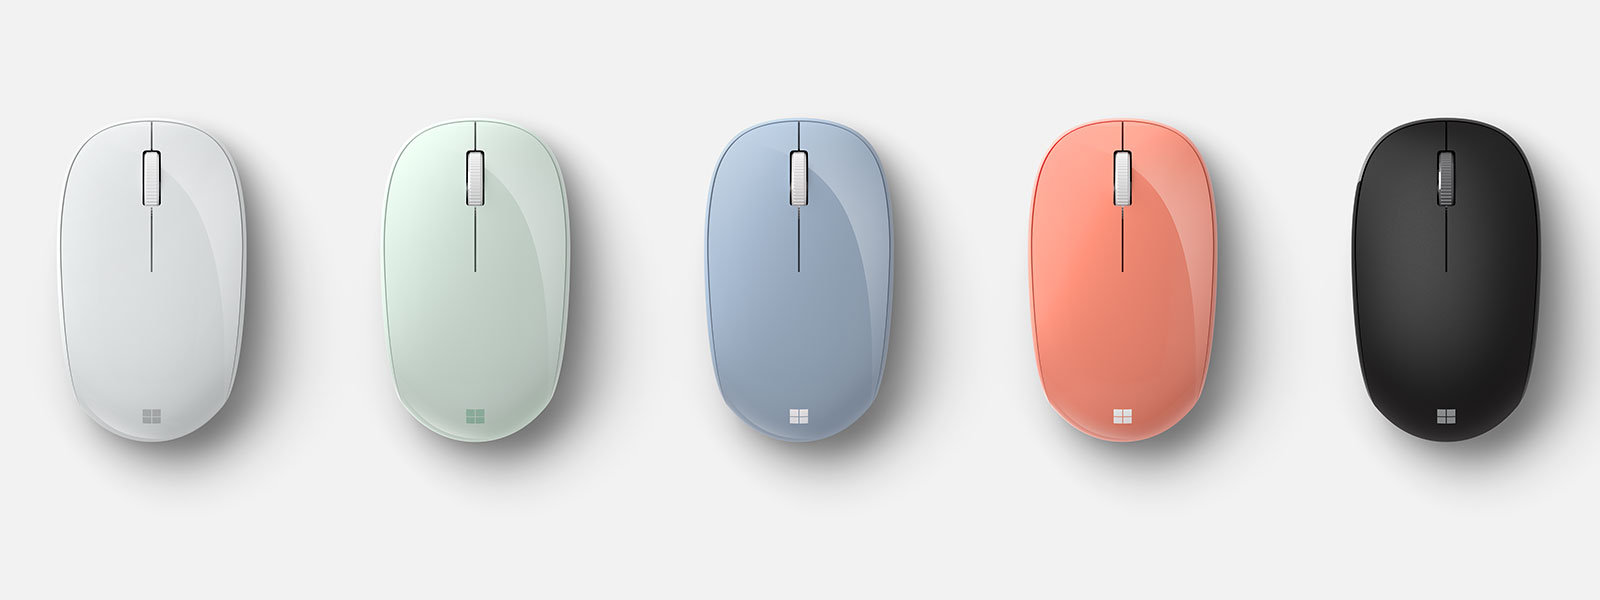 Microsoft Bluetooth® Mouse (Peach) [ RJN-00046 ]